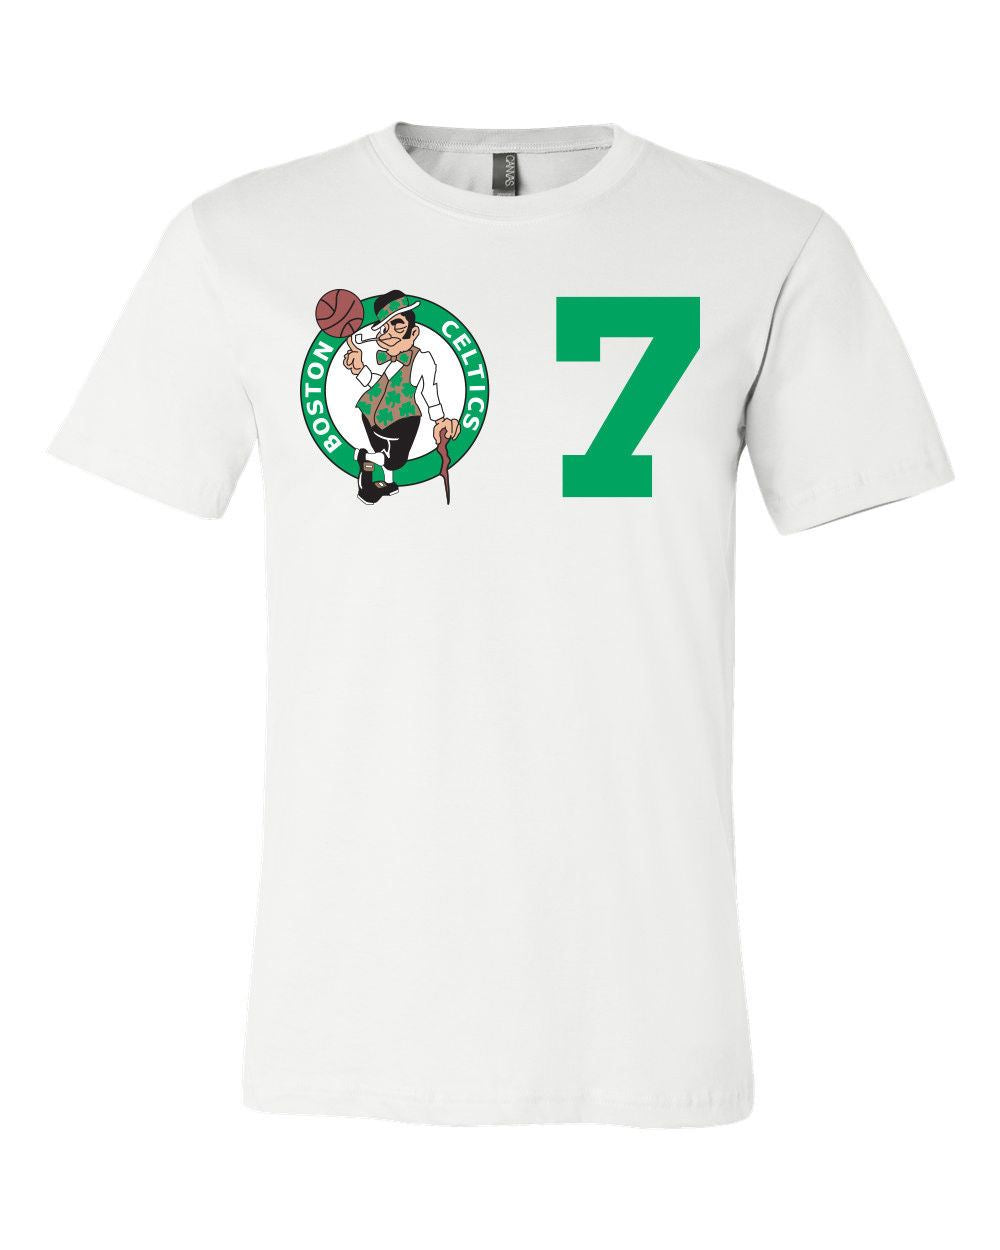 Jaylen Brown 7 Boston Celtics Jersey Team Shirt Sportz For Less